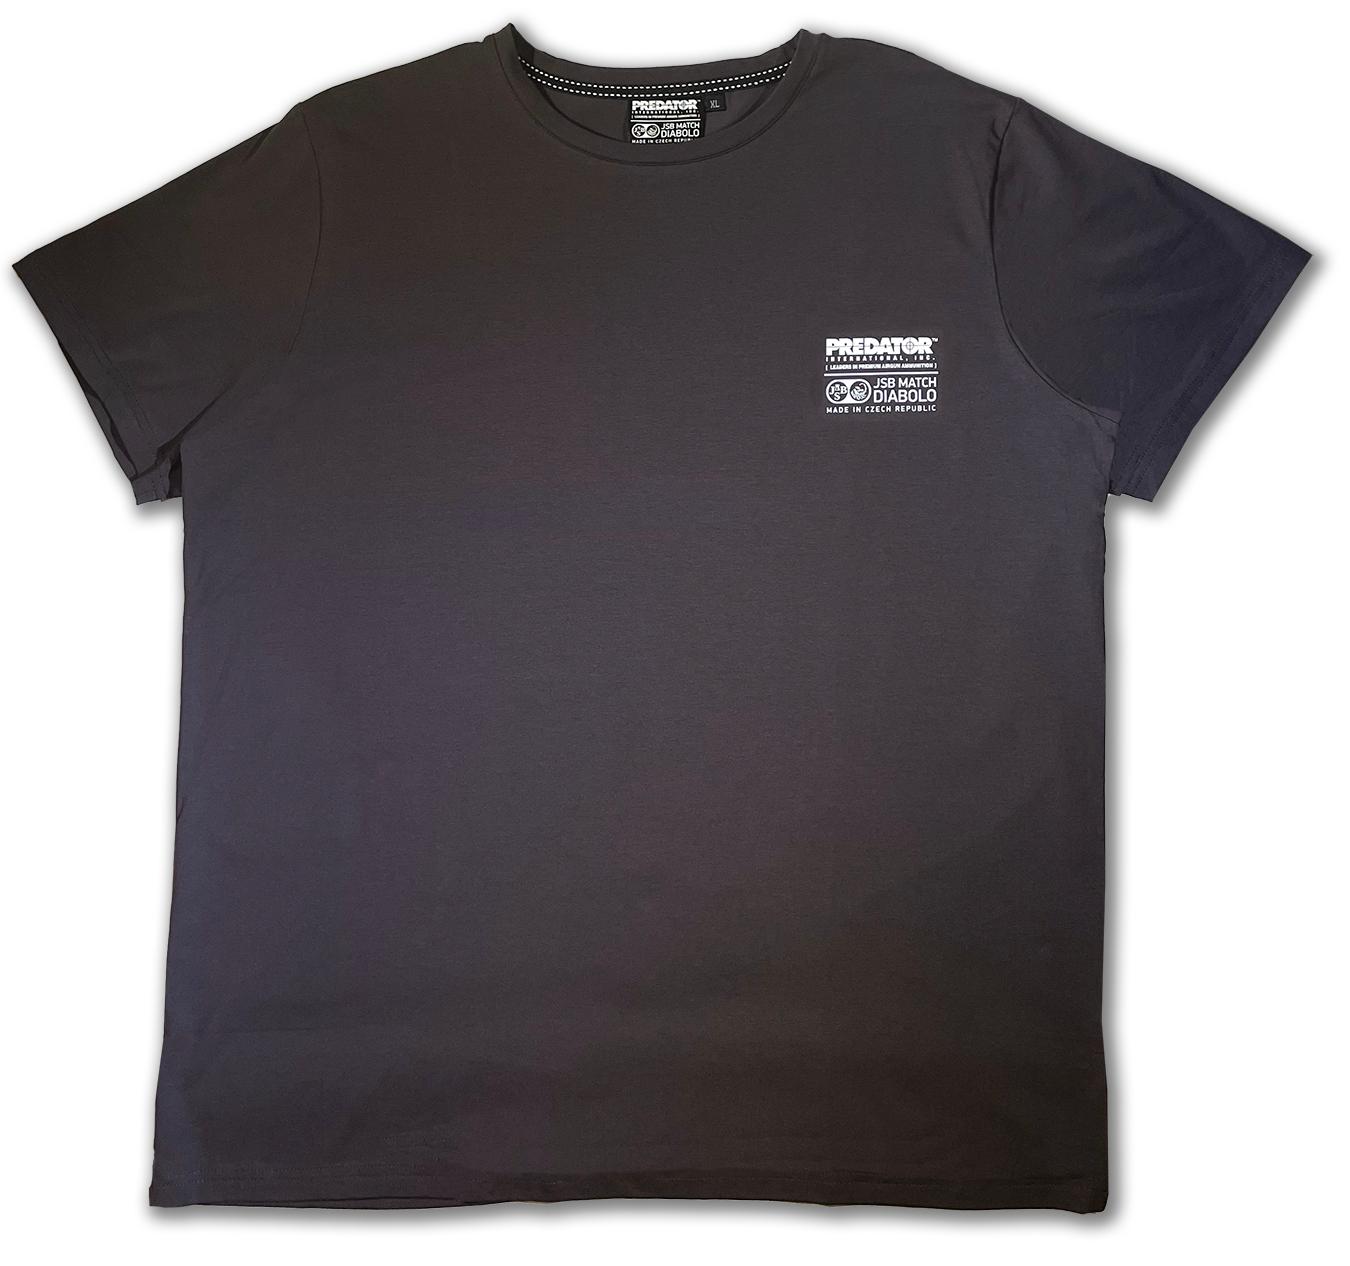 JSB Predator Short Sleeve Cotton/Spandex T-Shirt